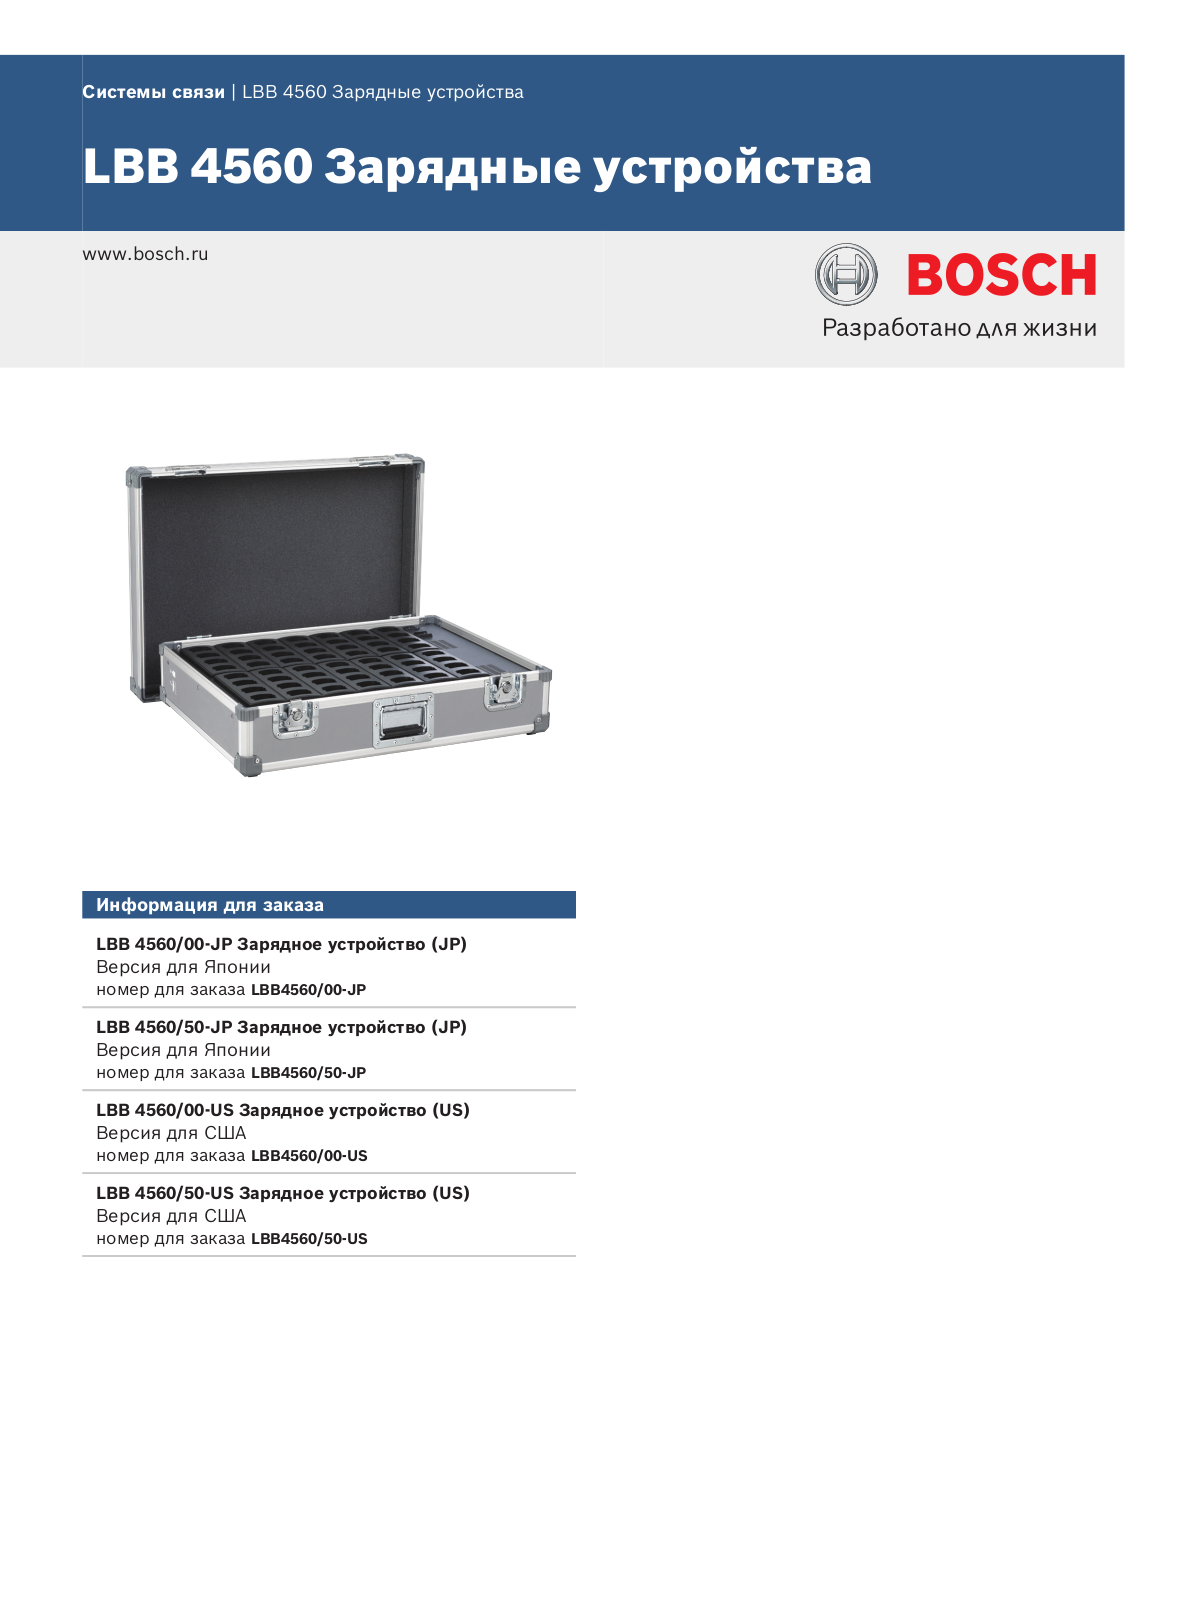 BOSCH LBB 4560 User Manual